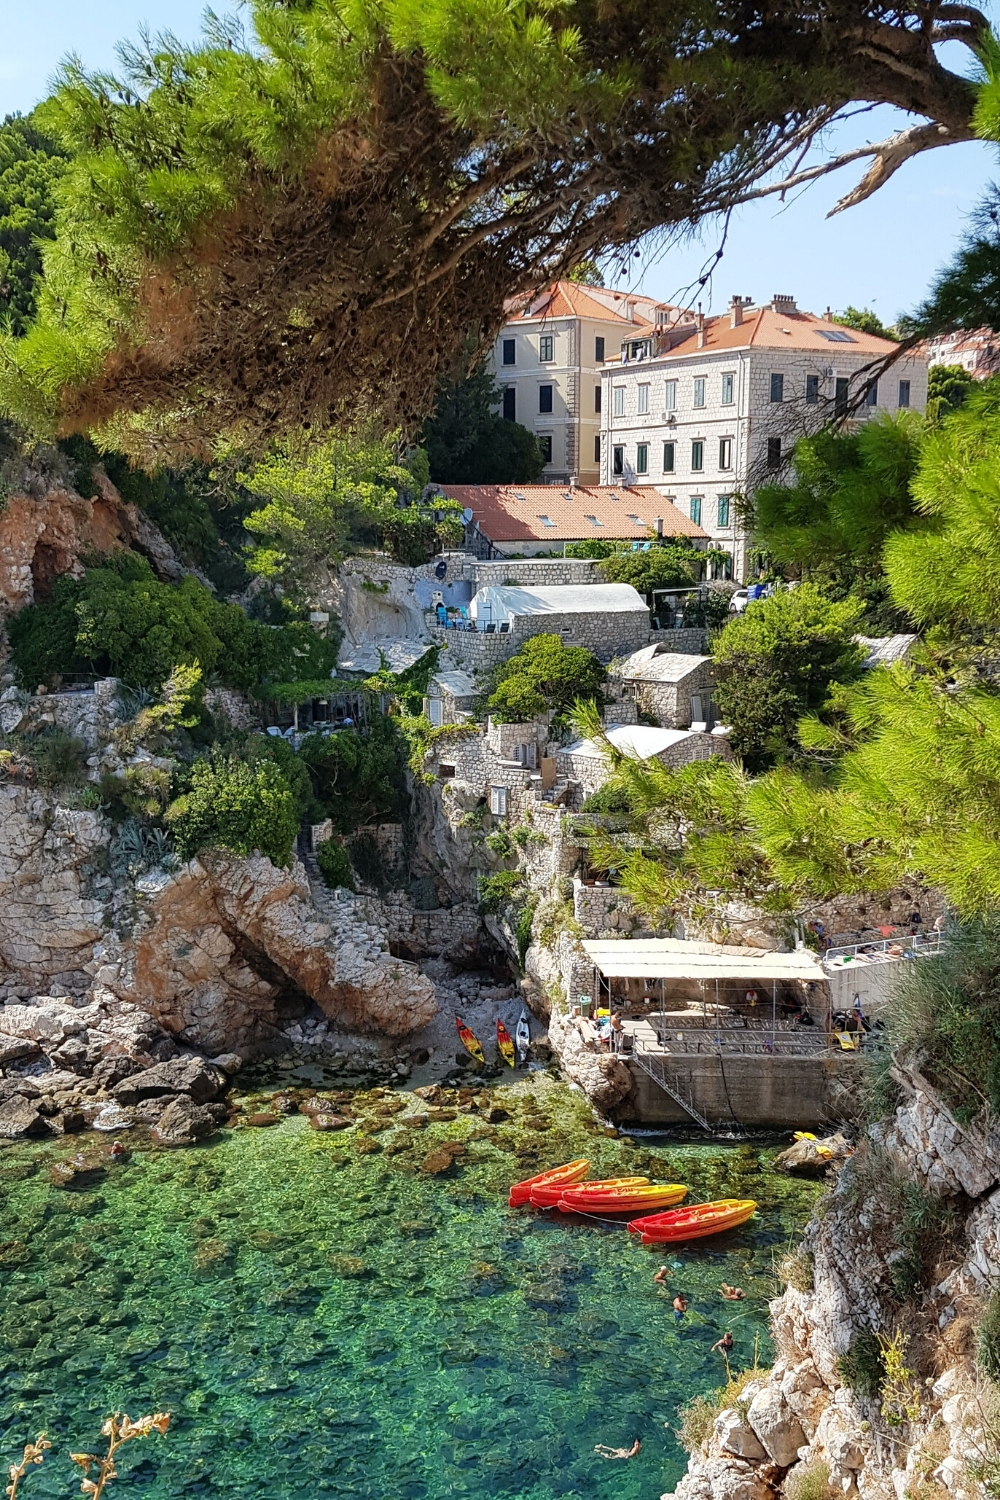 Dømme Hjemløs hektar 10 Best Places to Visit in Croatia - World of Wanderlust